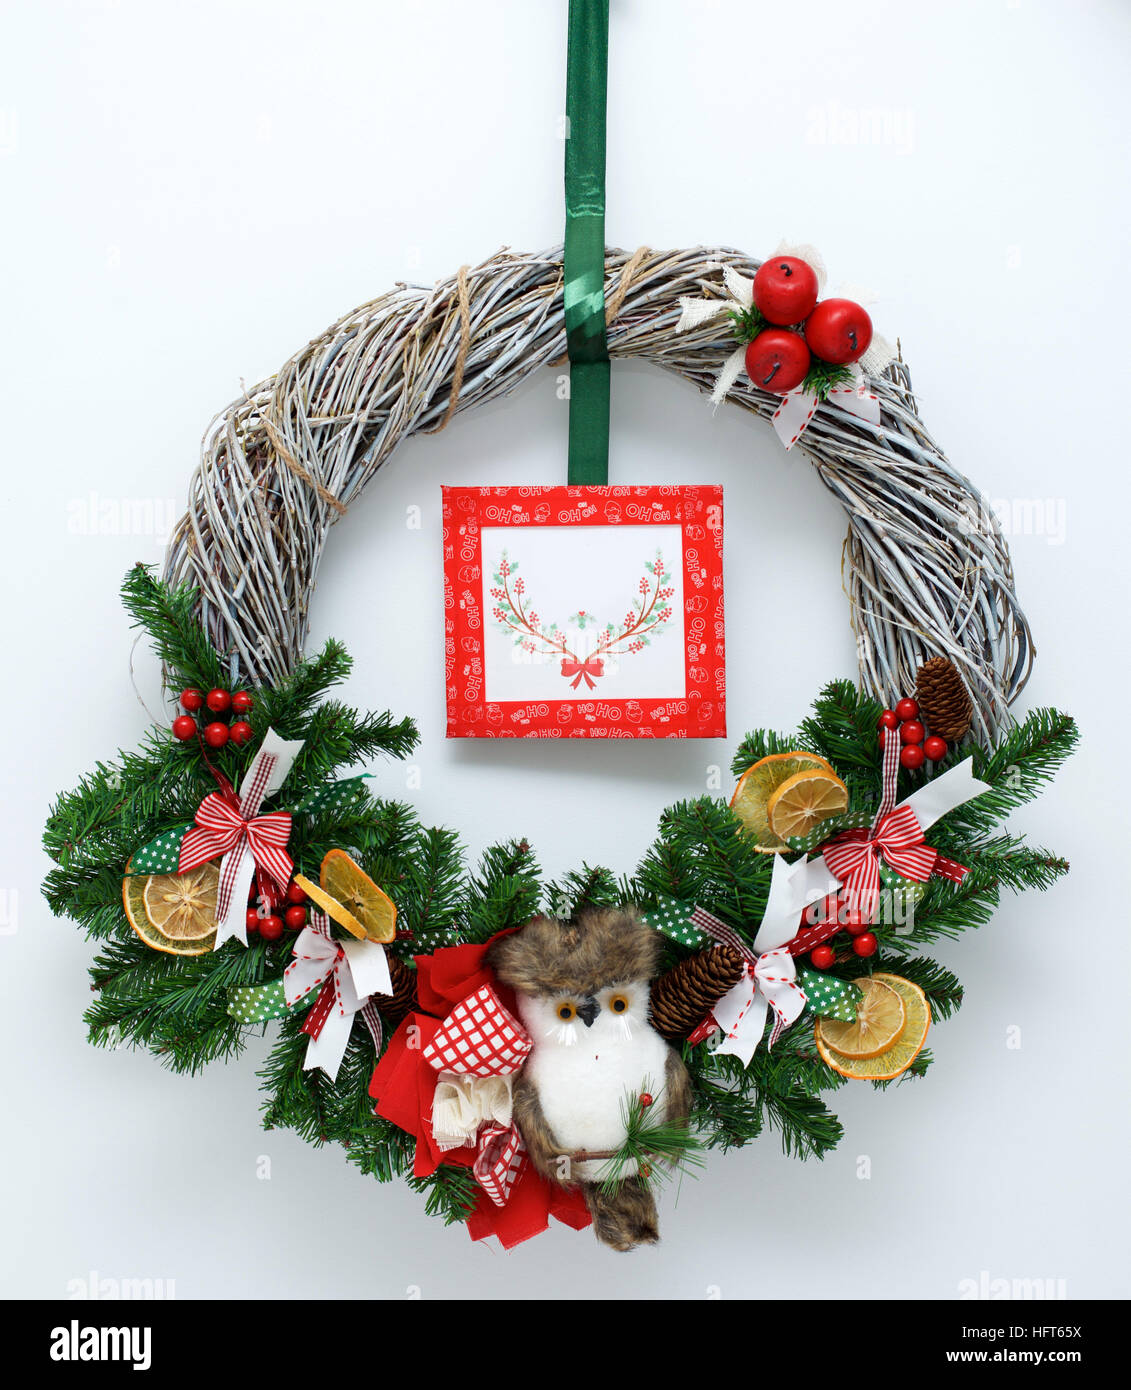 New Year. Christmas holiday. Christmas wreath Stock Photo